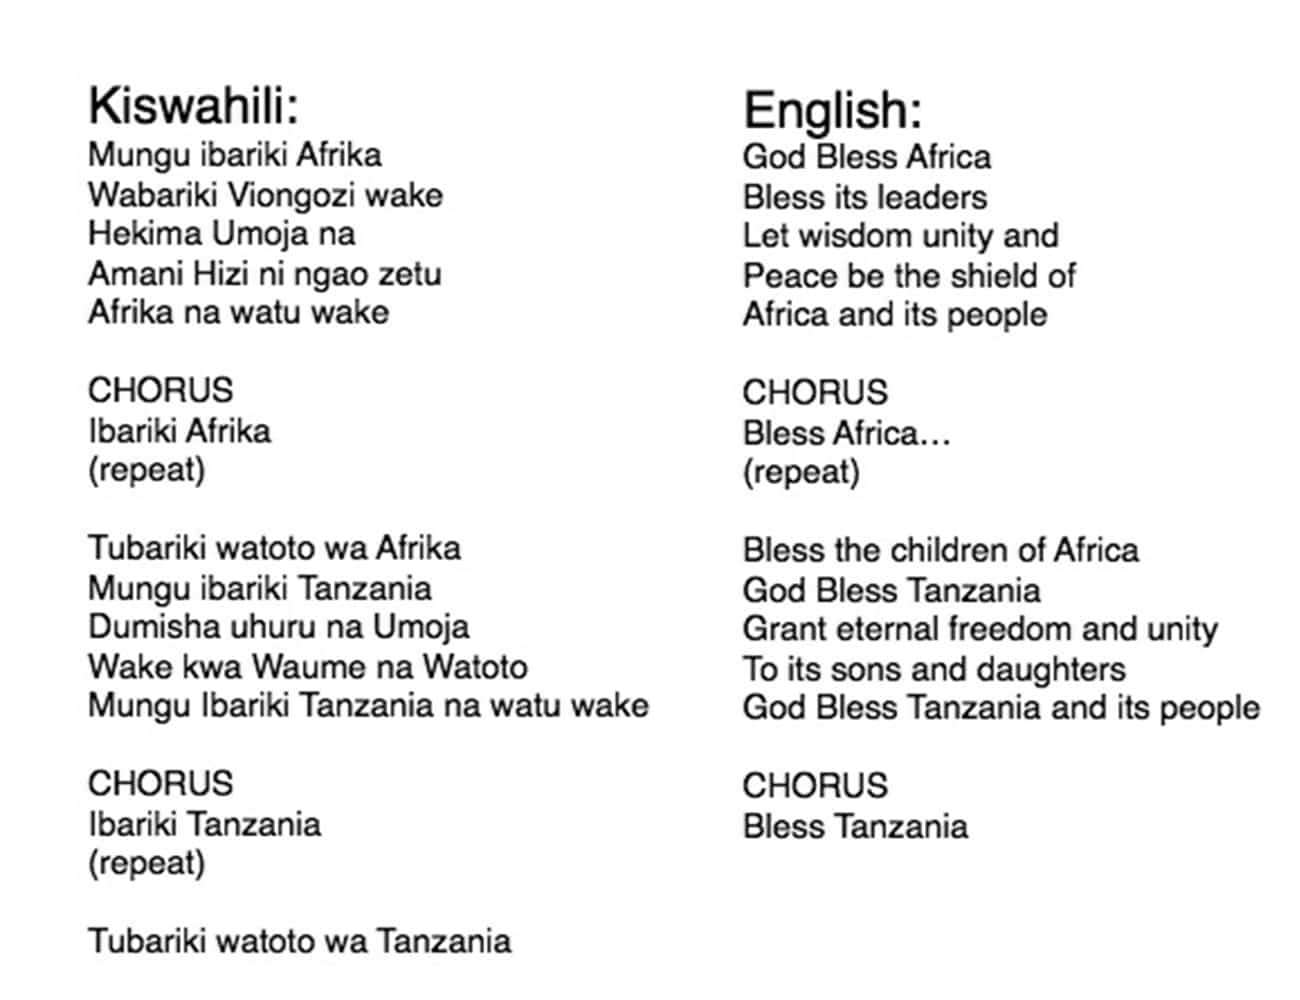 The Lyrics of Tanzania National Anthem